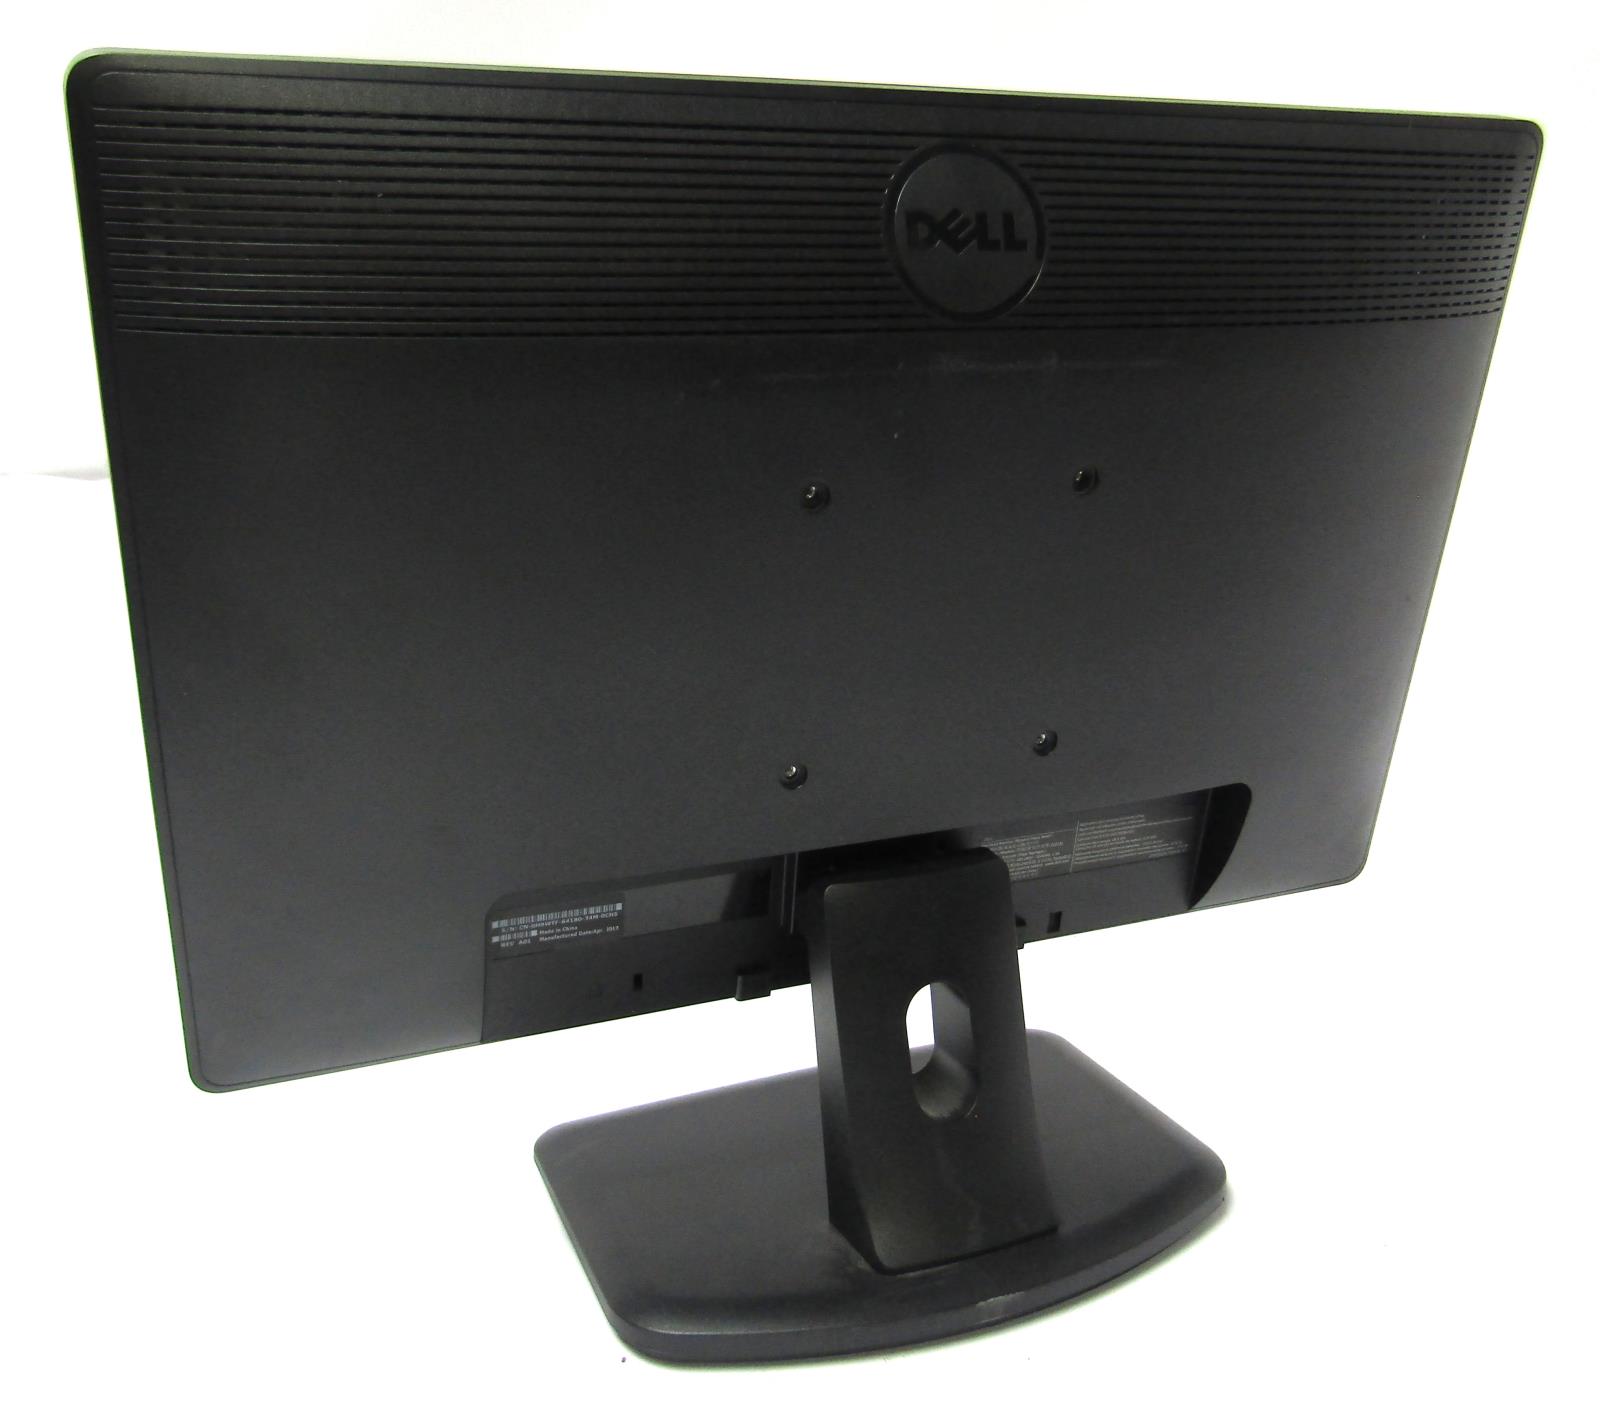 Dell E2213c 22" LCD Monitor | Resolution 1680 x 1050 at 60 Hz | eBay